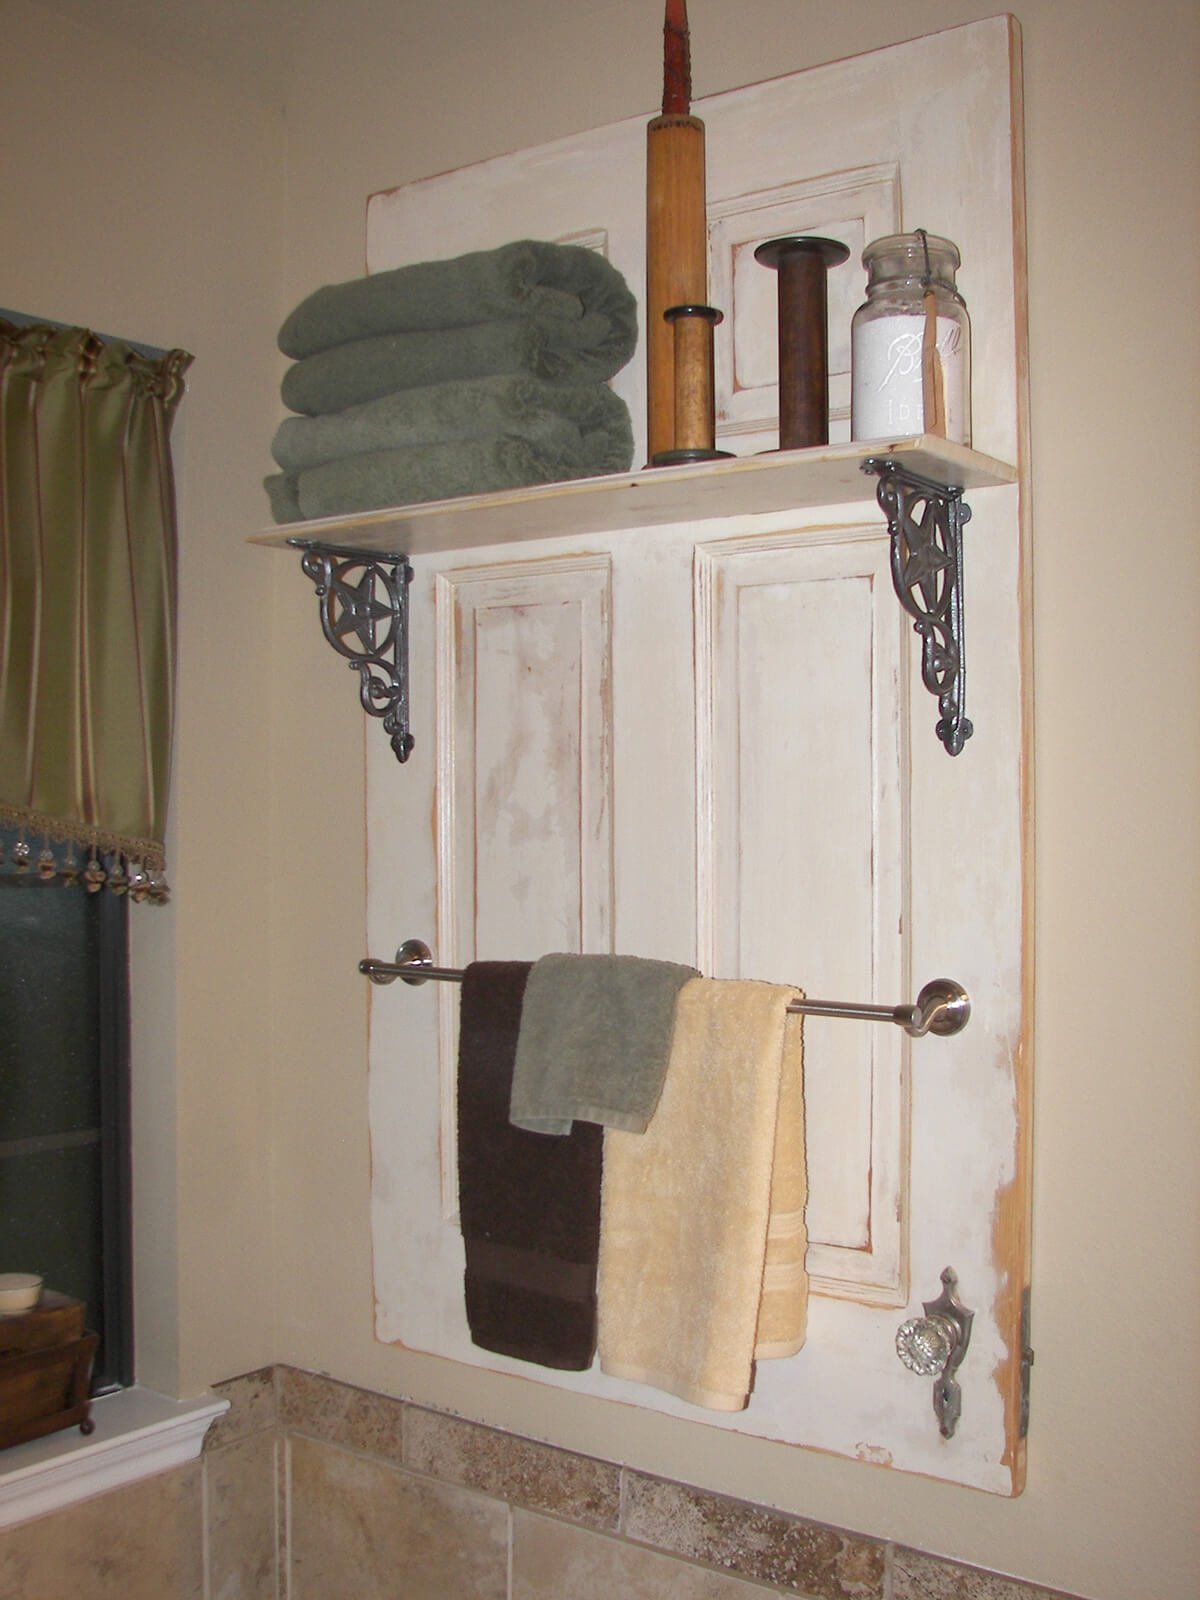 Powder Room Towel Rack and Display